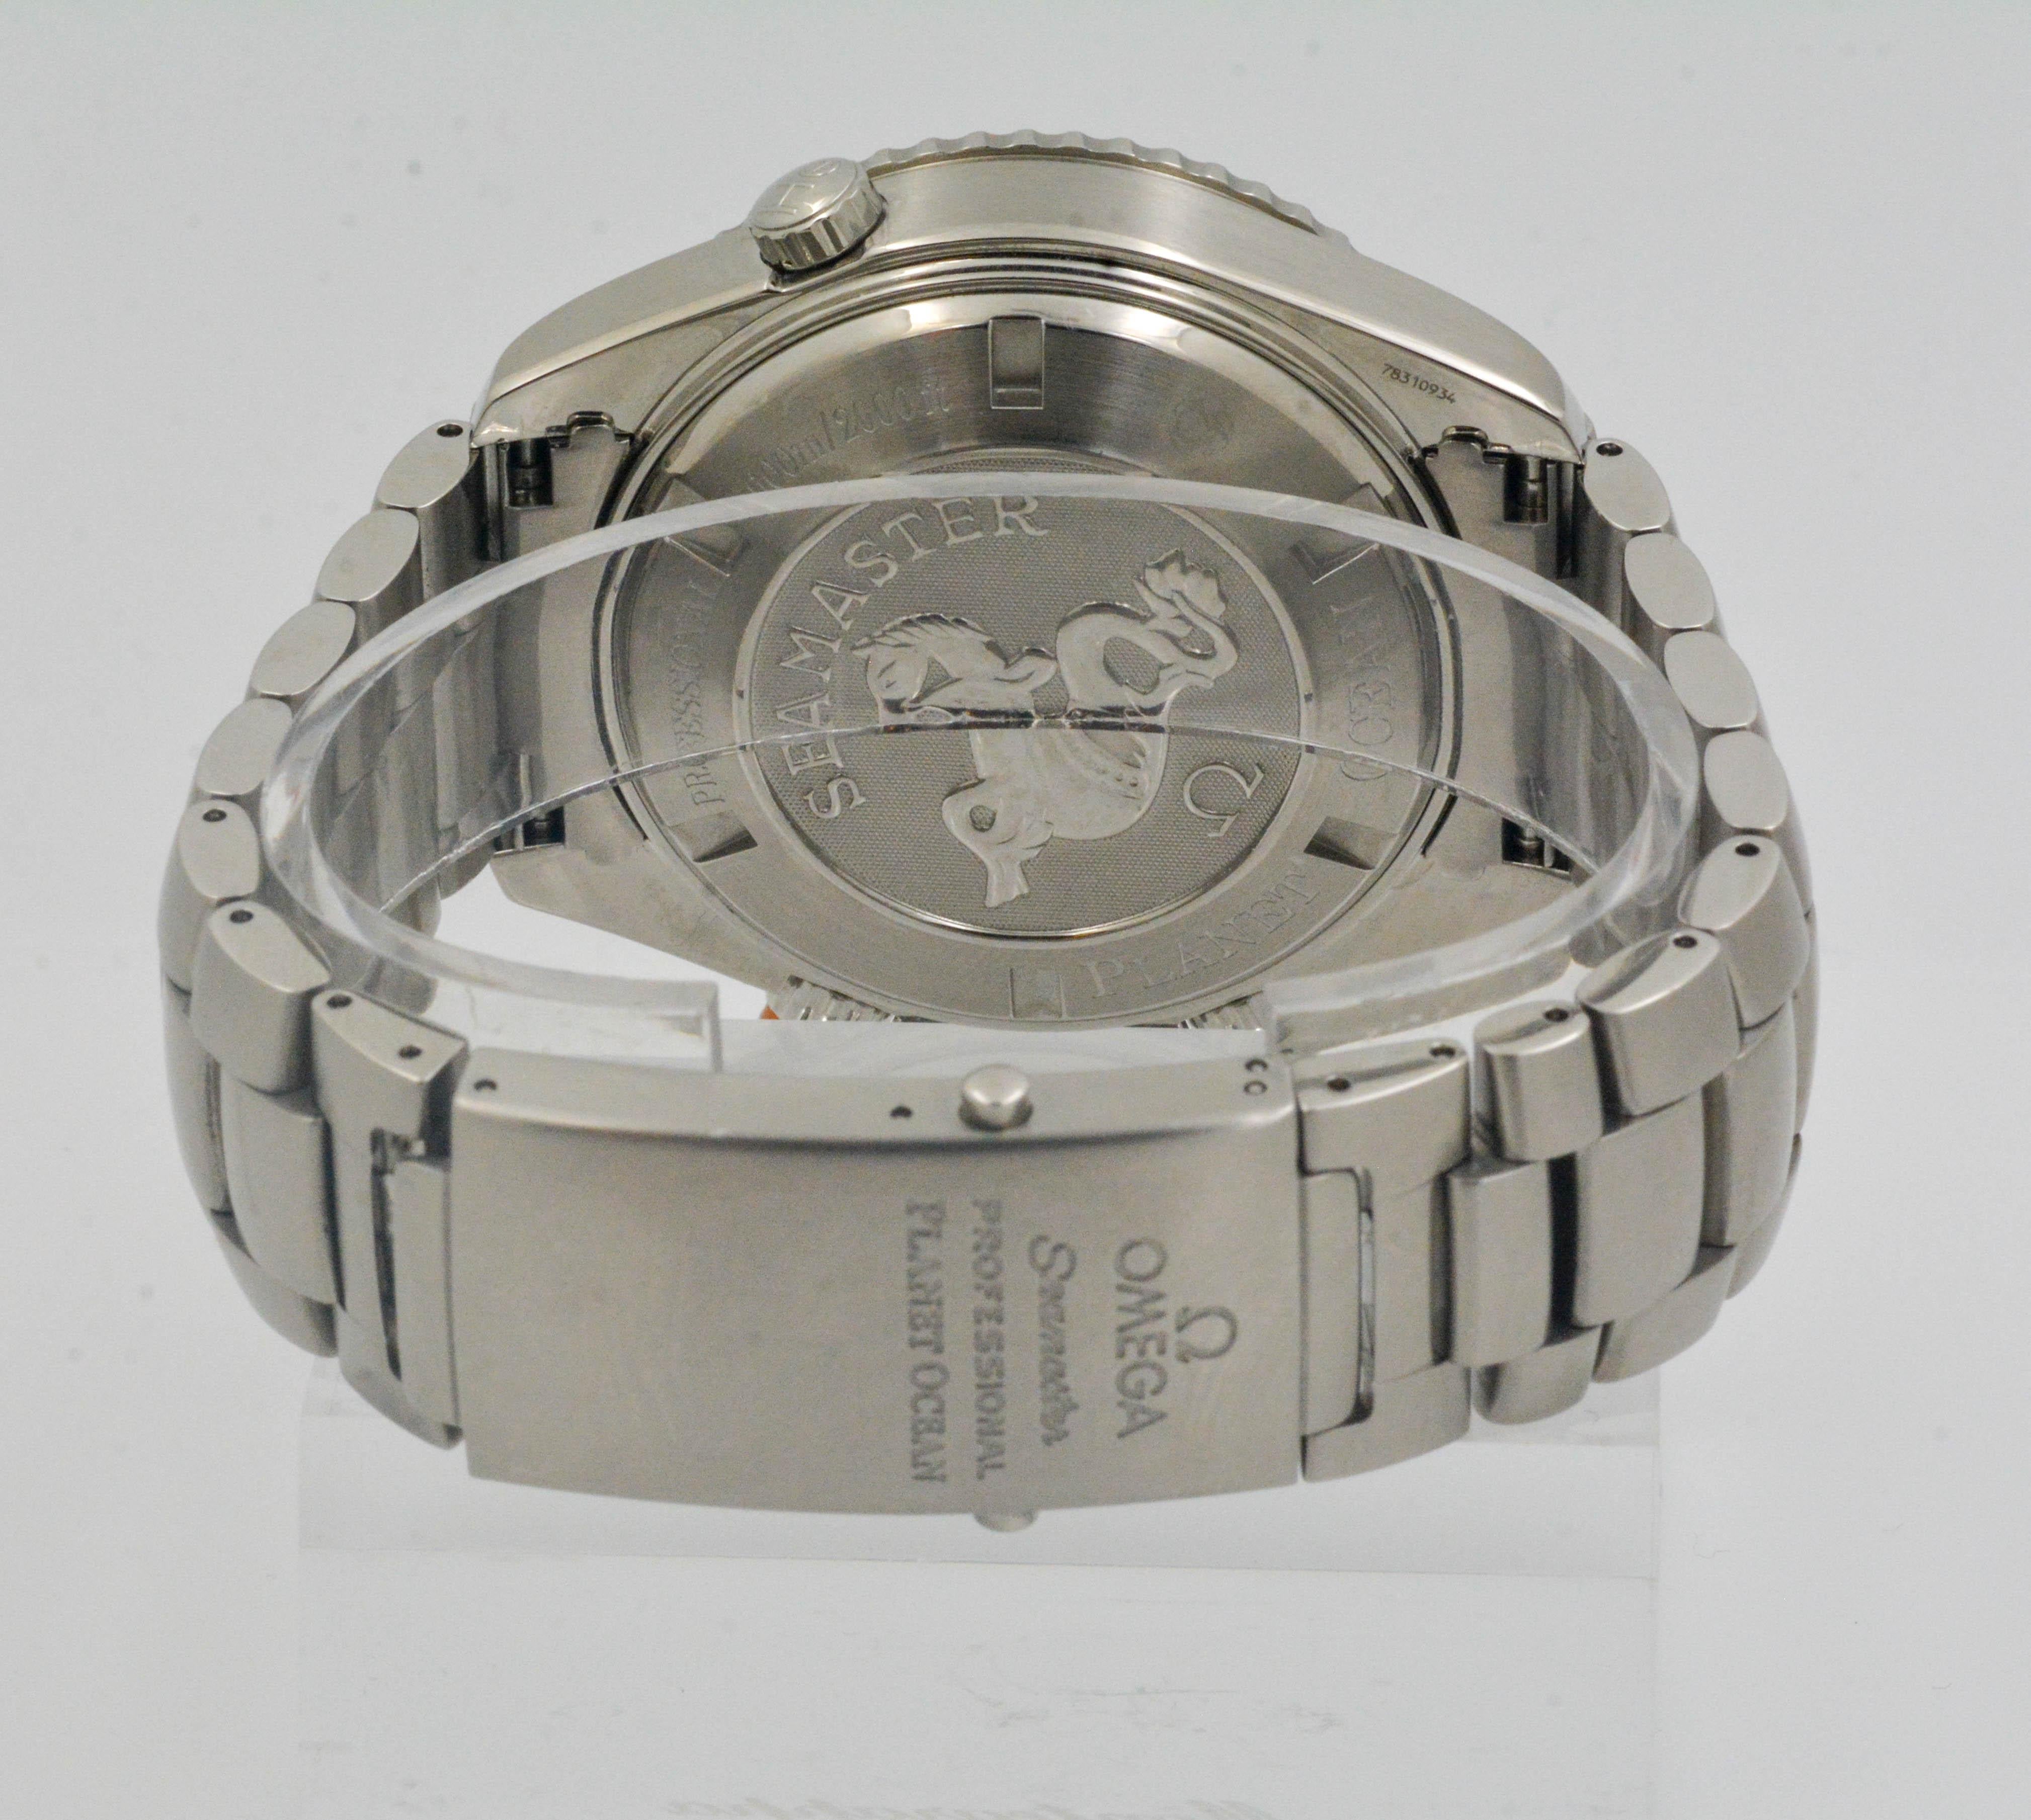 Modern OMEGA Seamaster Planet Ocean Chronograph Watch